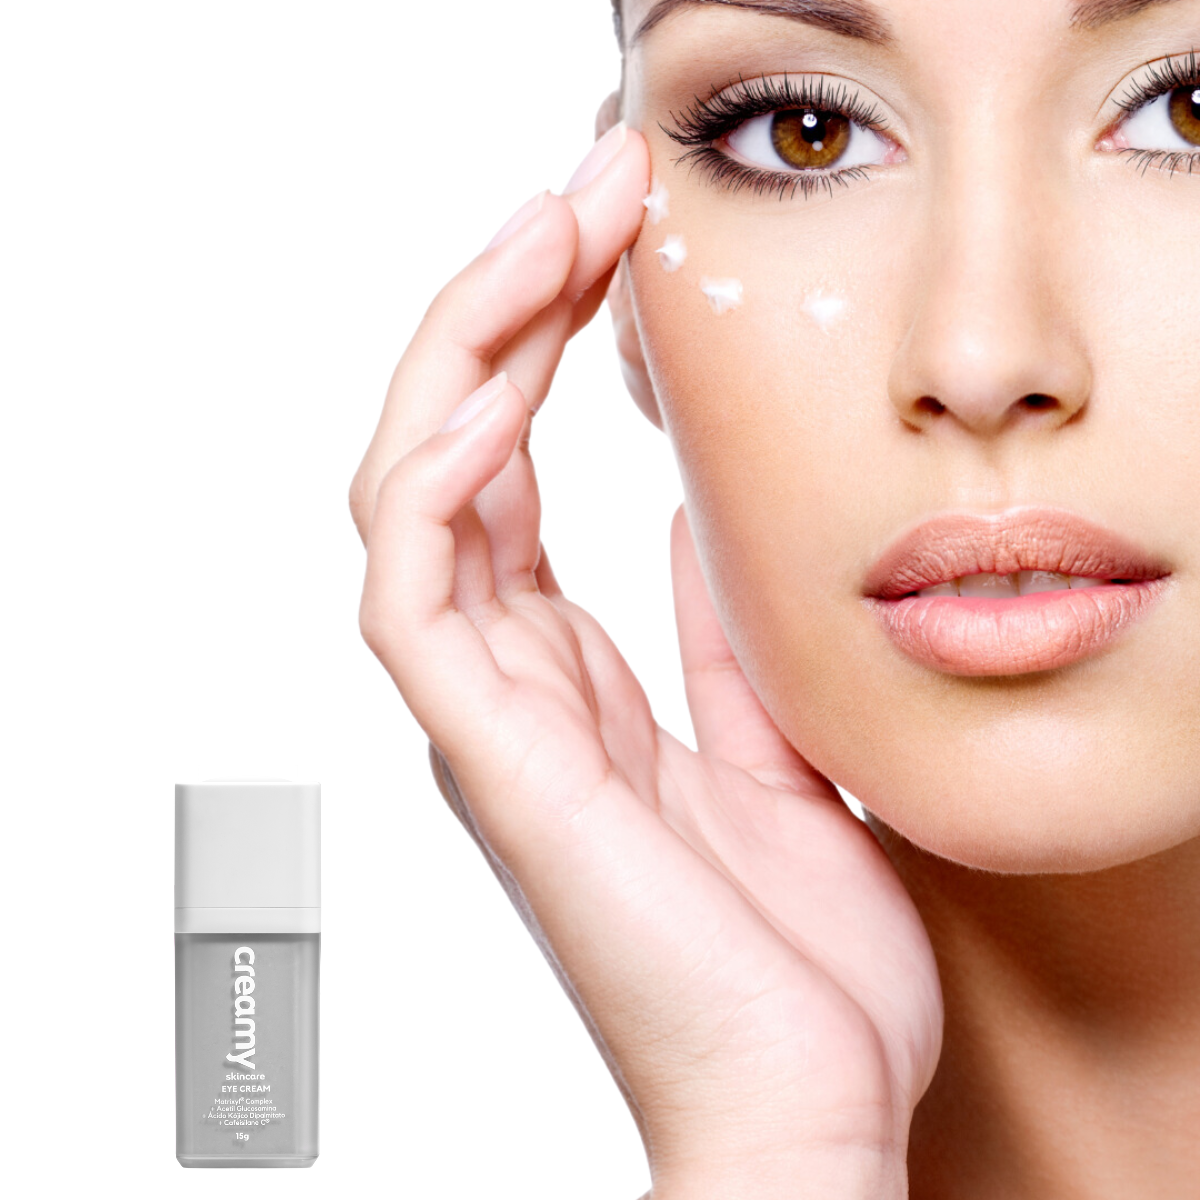 Creamy Eye Cream - Brightening Anti-Wrinkle - Buy professional cosmetics dedicated to hair removal